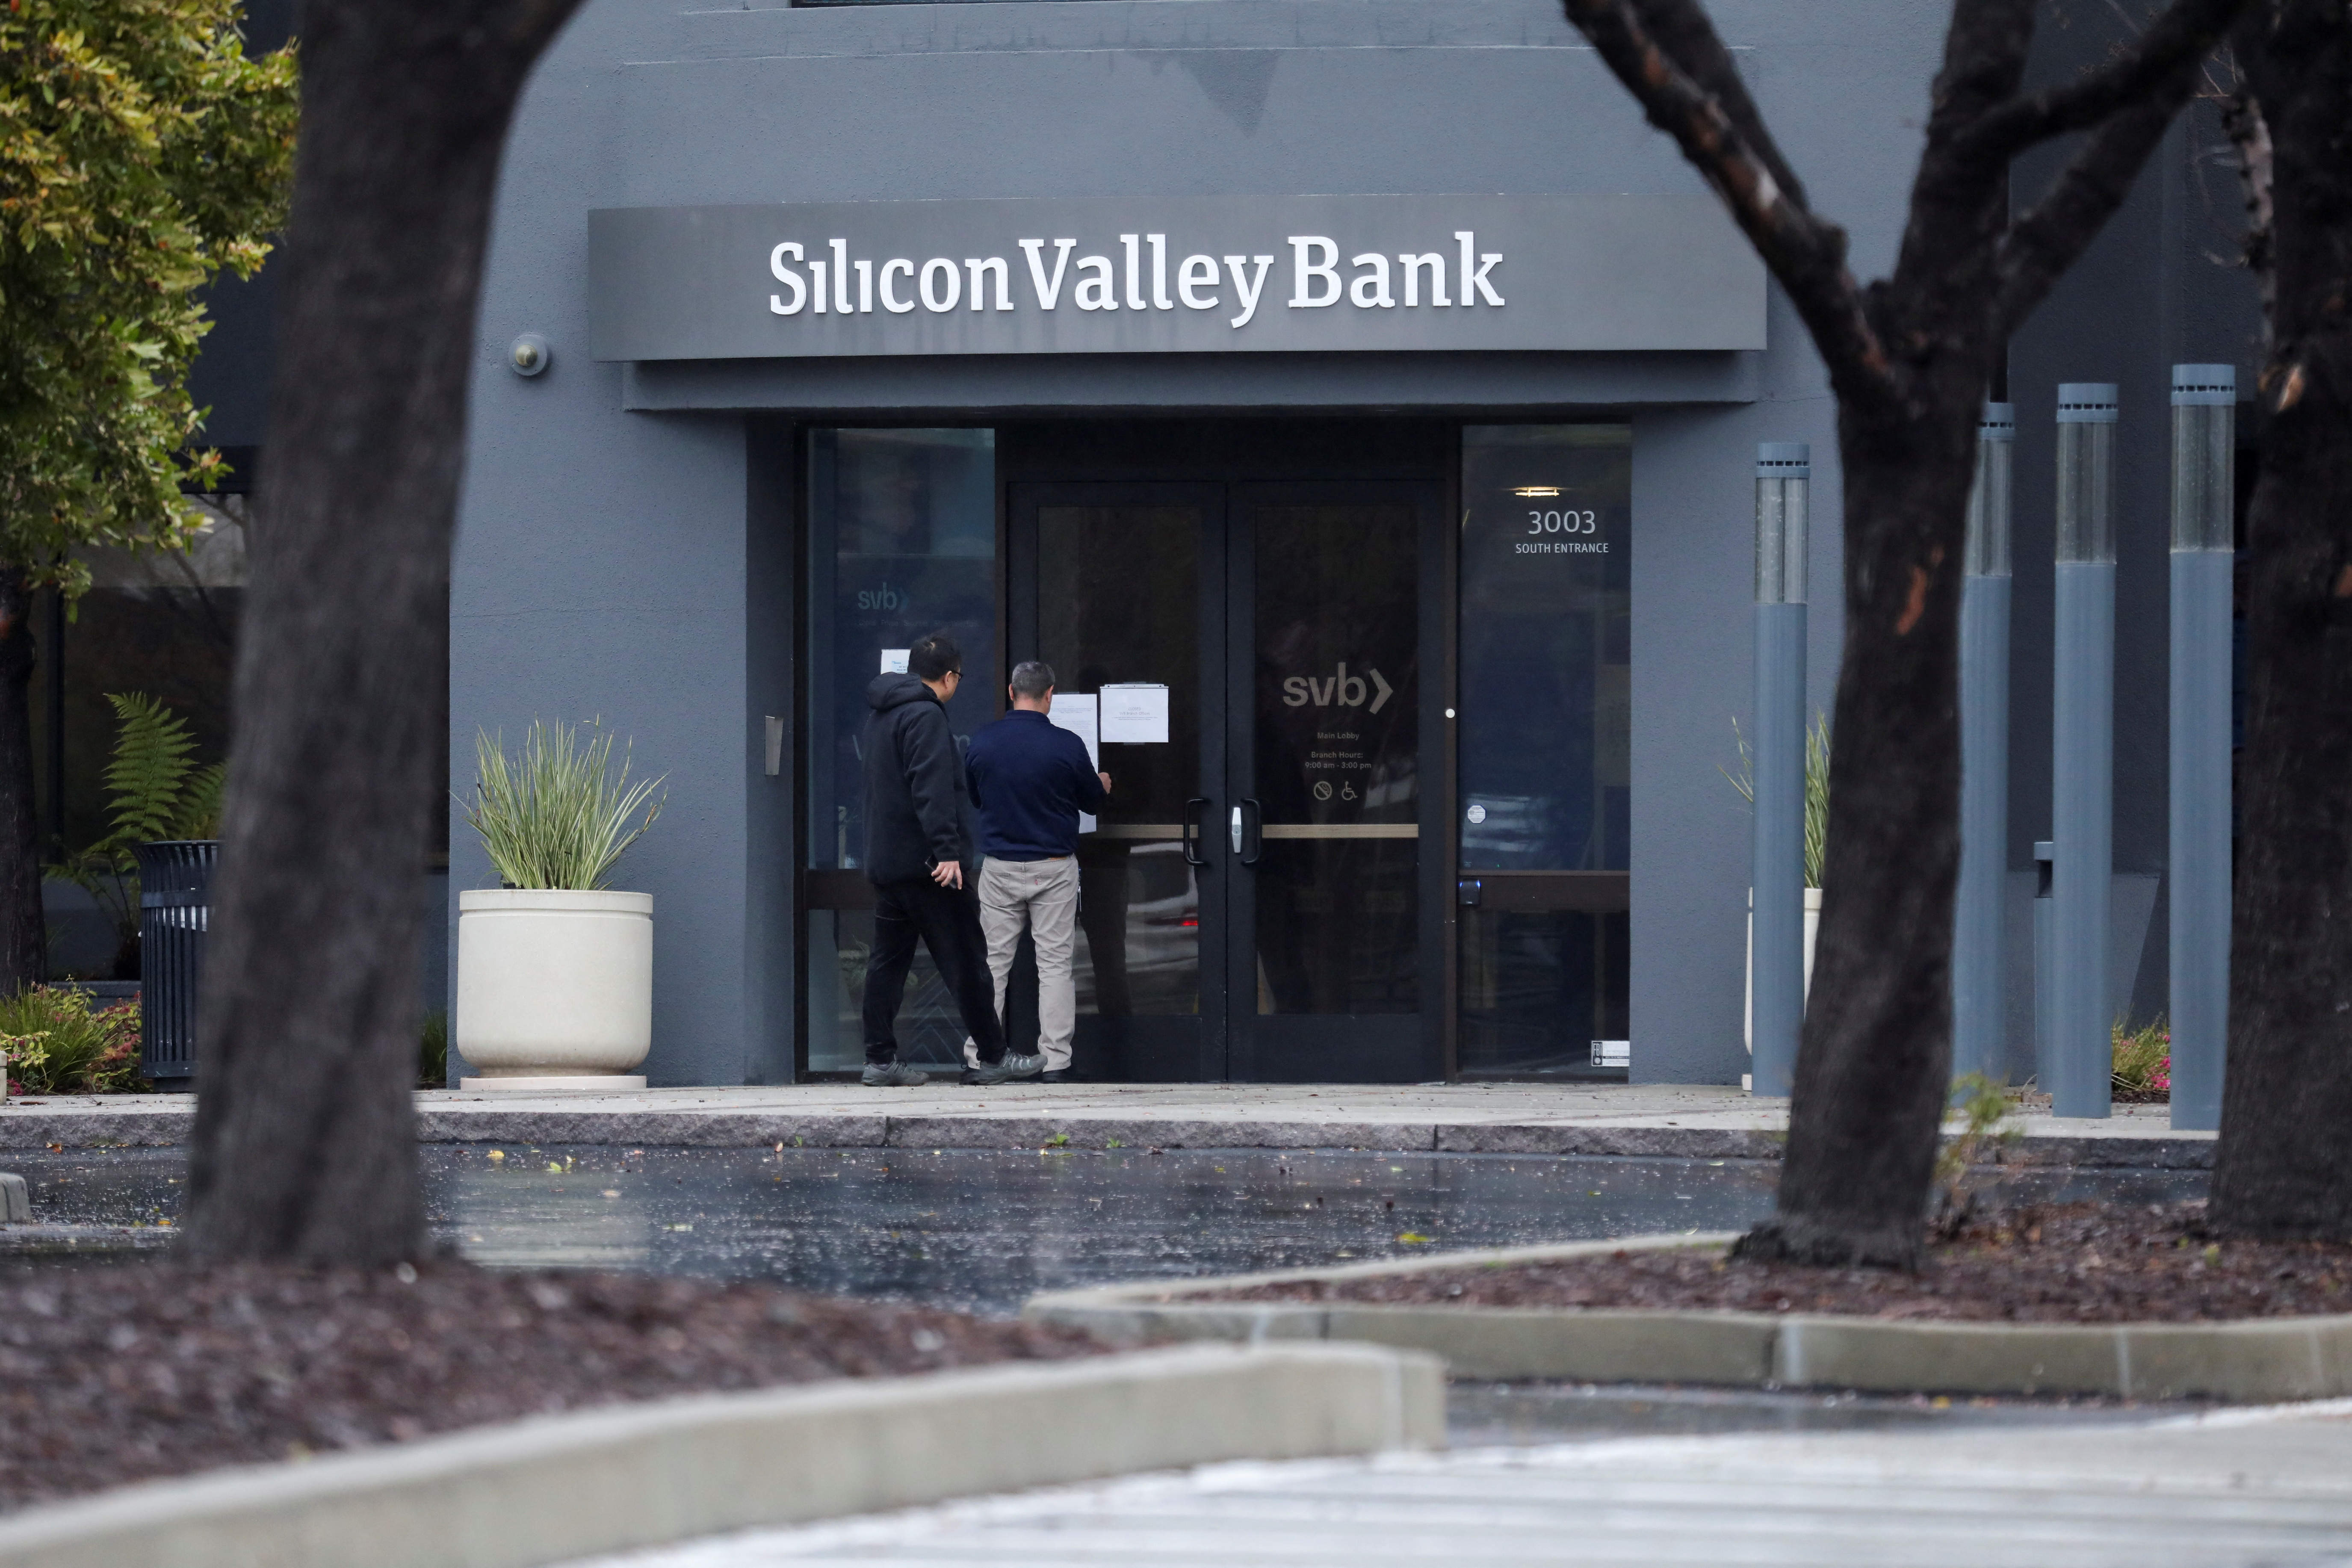 Banking regulators shut down Silicon Valley Bank